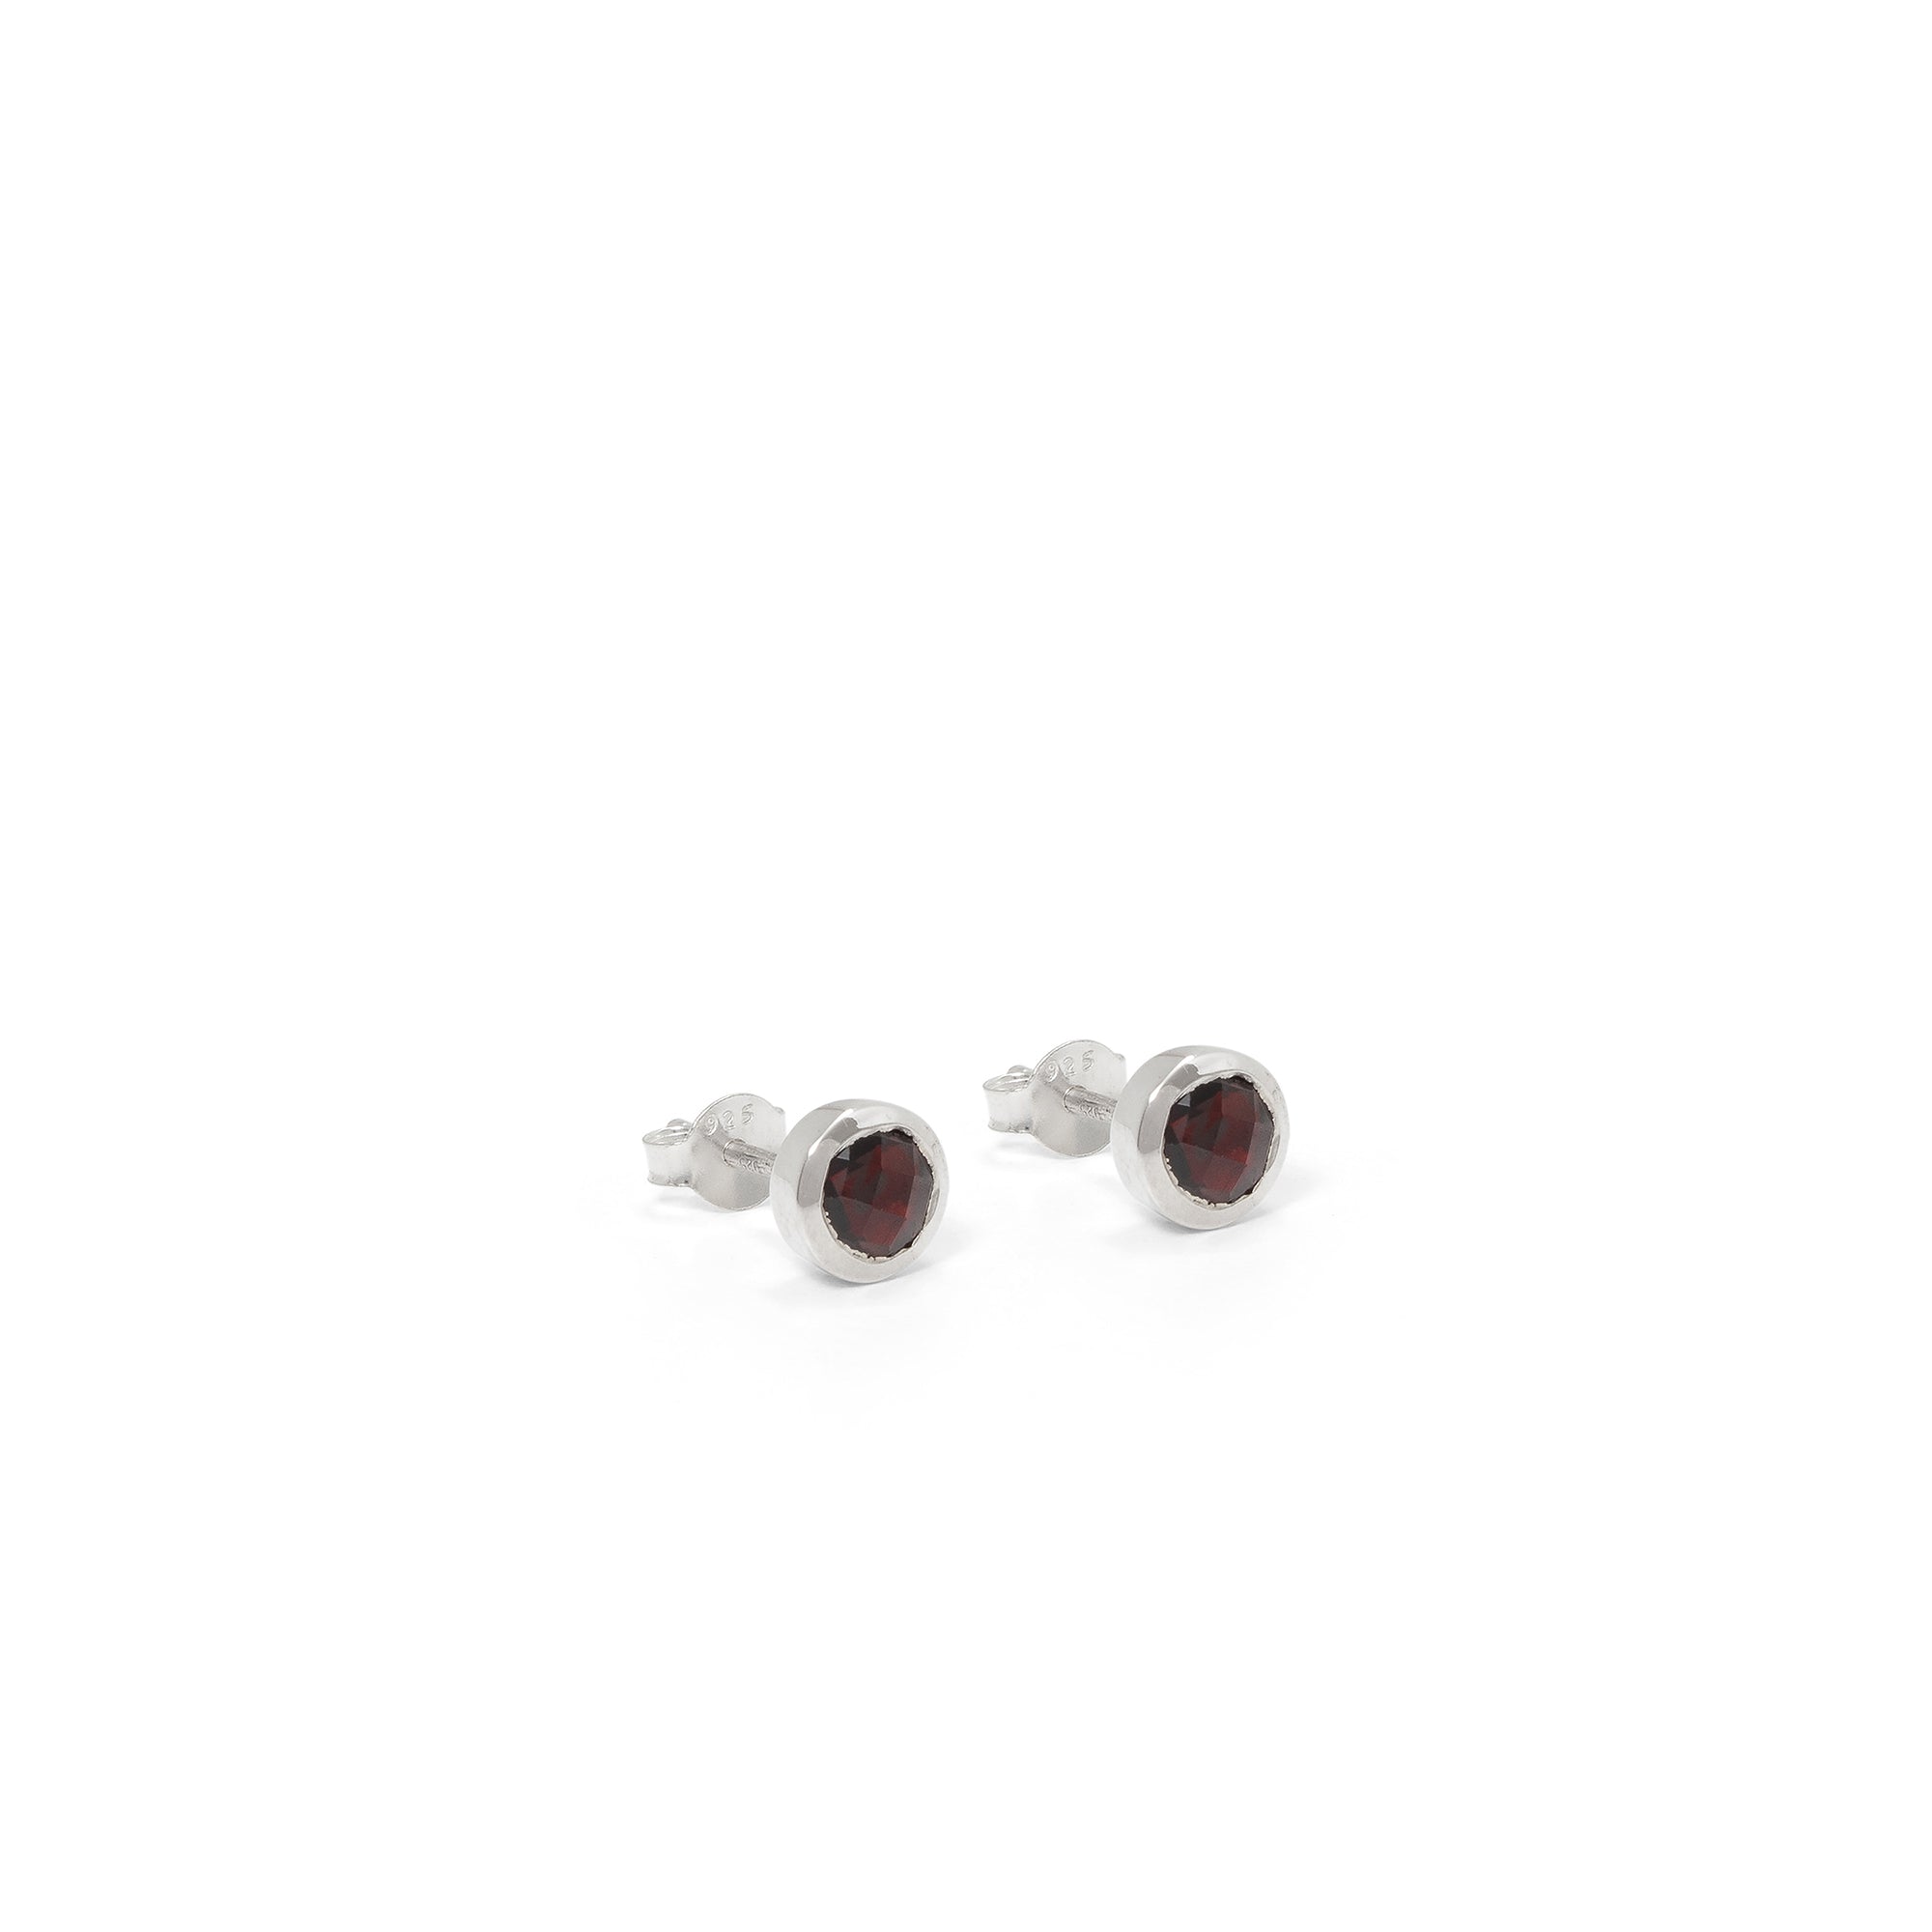 Birthstone Stud Earrings January: Garnet and Sterling Silver